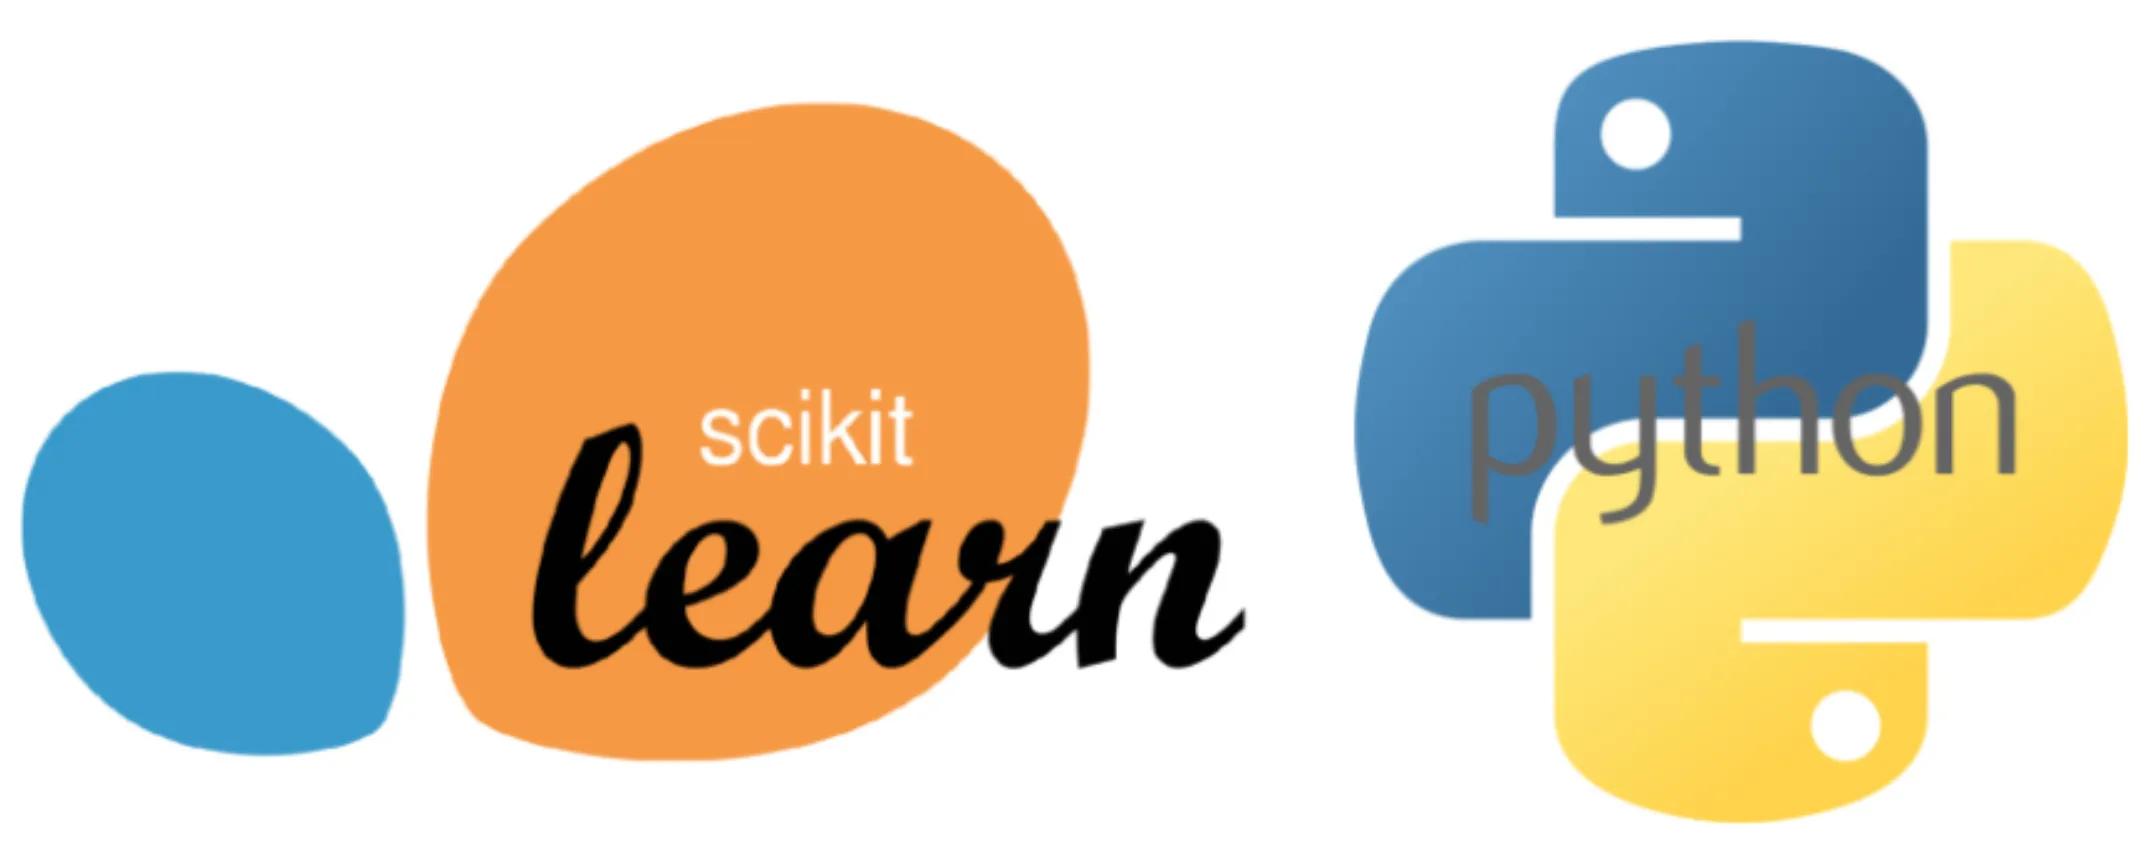 Scikit Learn & Python logo